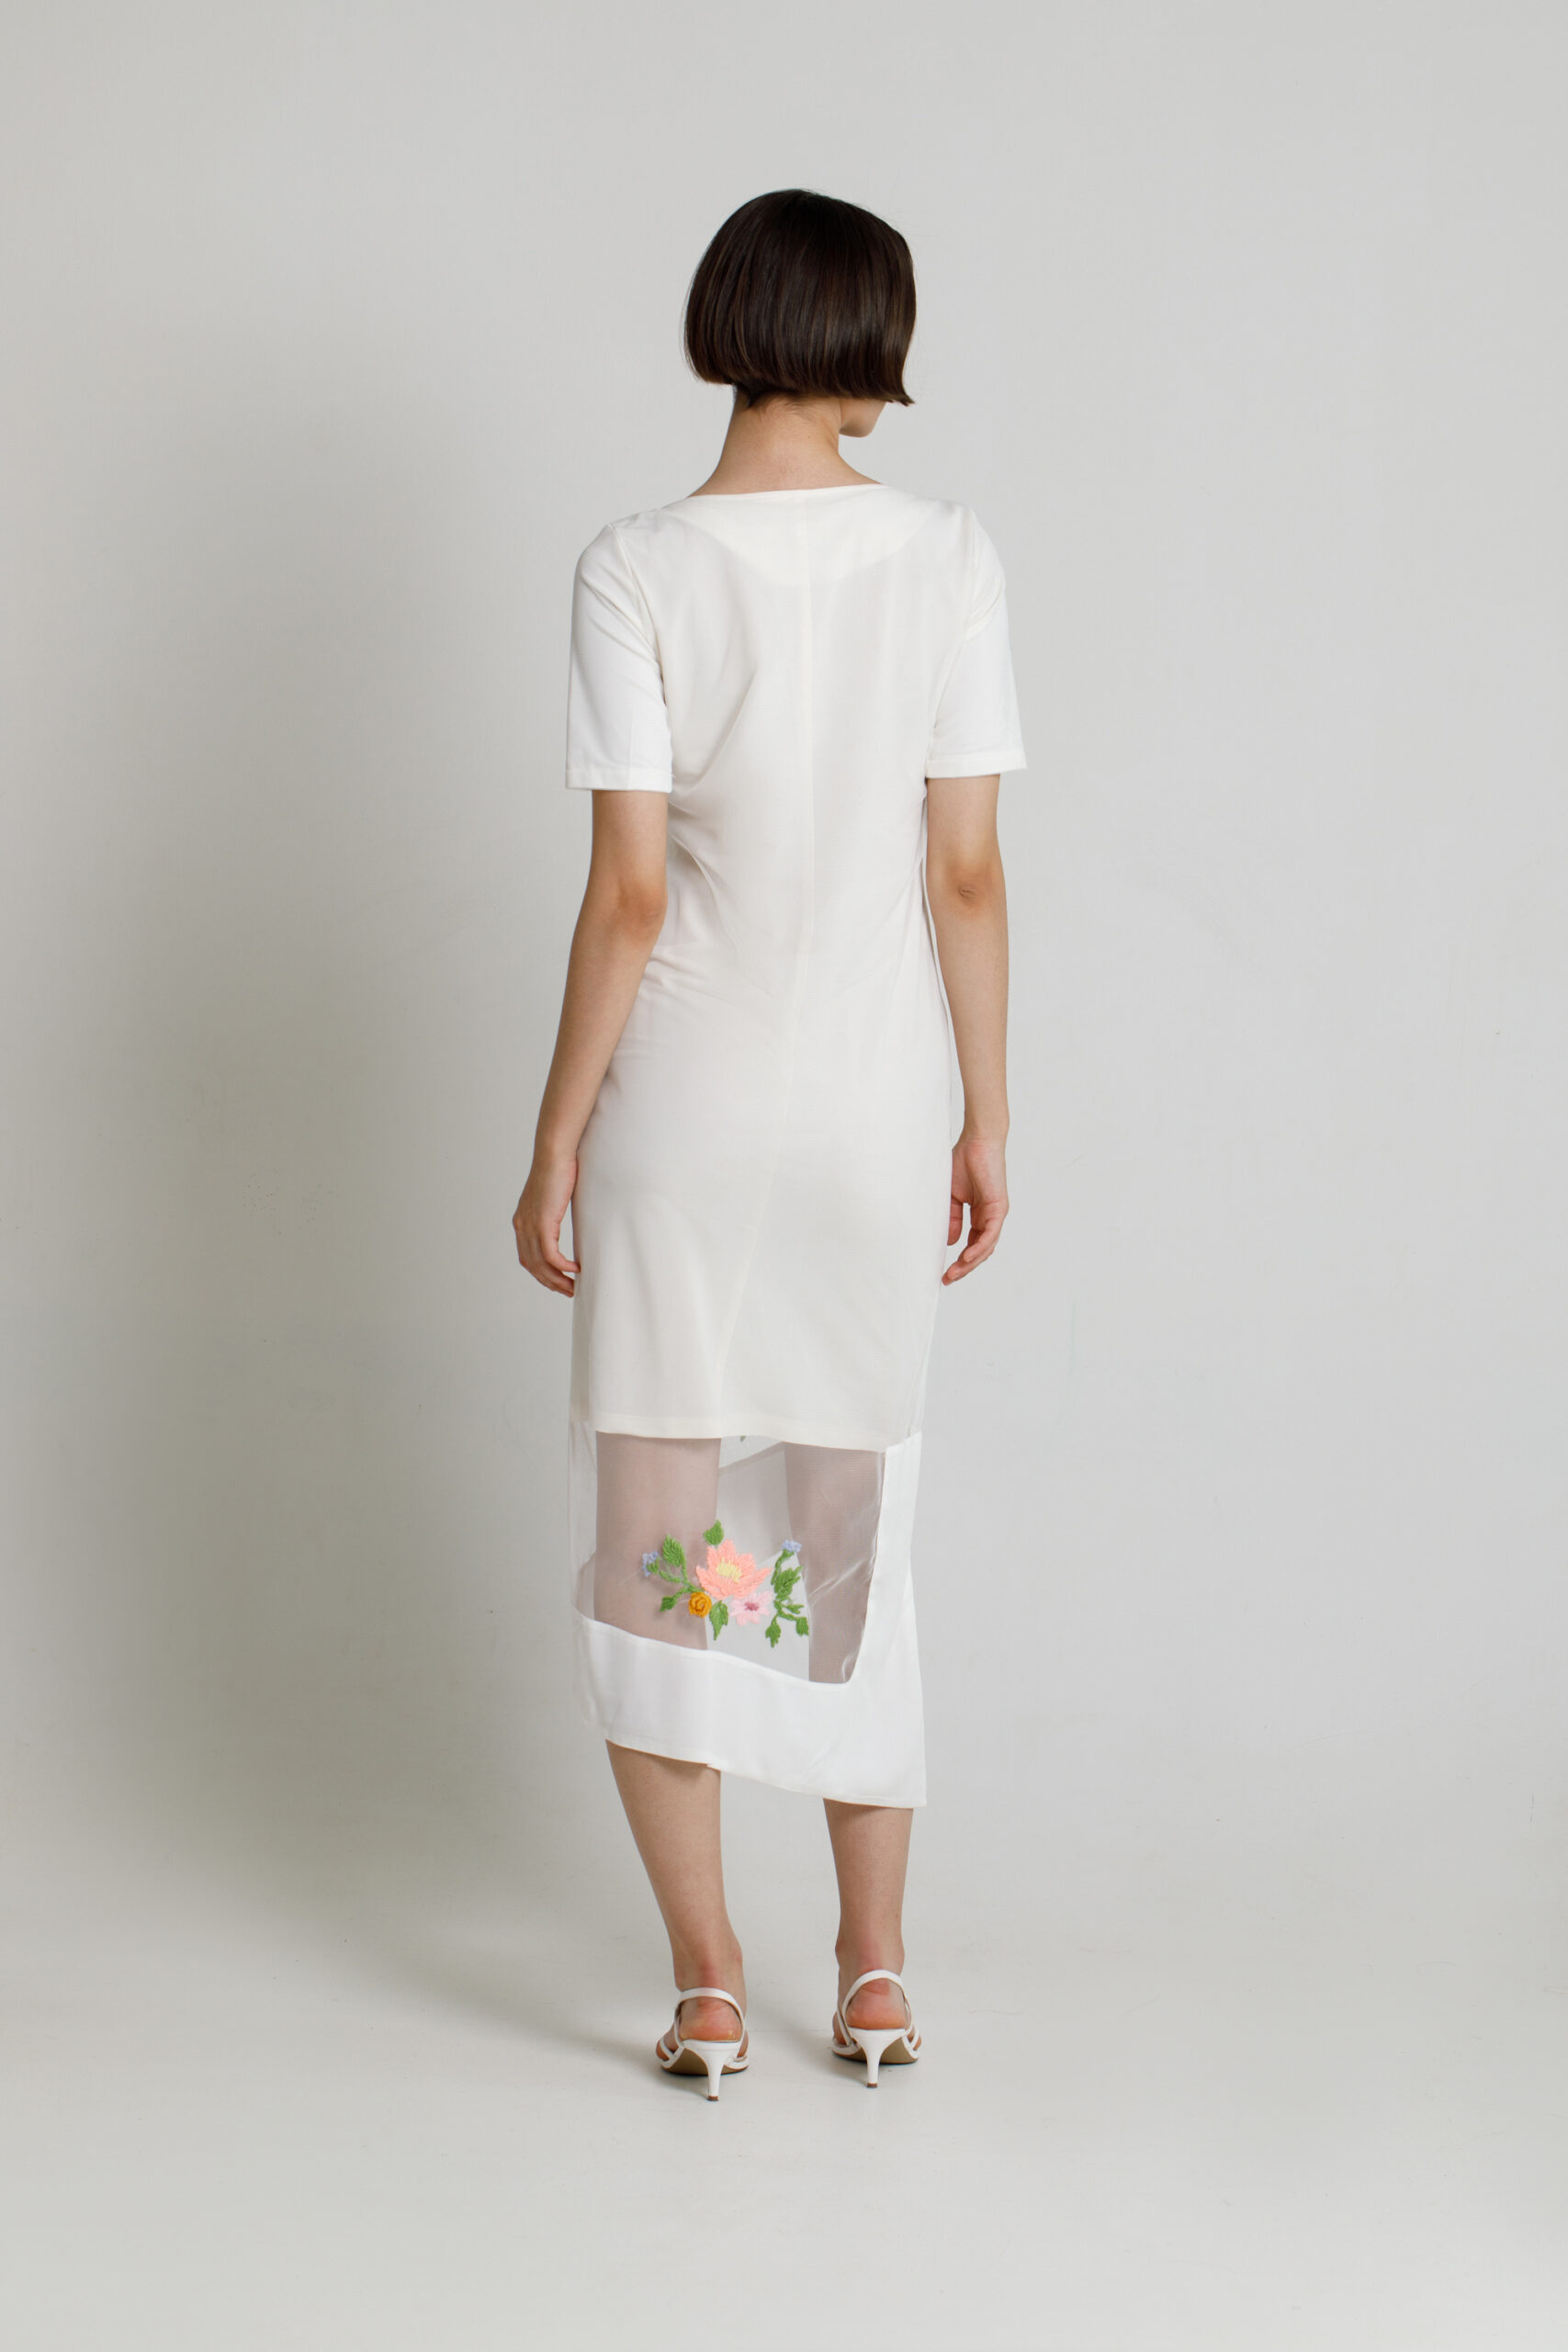 MARDI elegant white asymmetric dress with embroidered tulle. Natural fabrics, original design, handmade embroidery